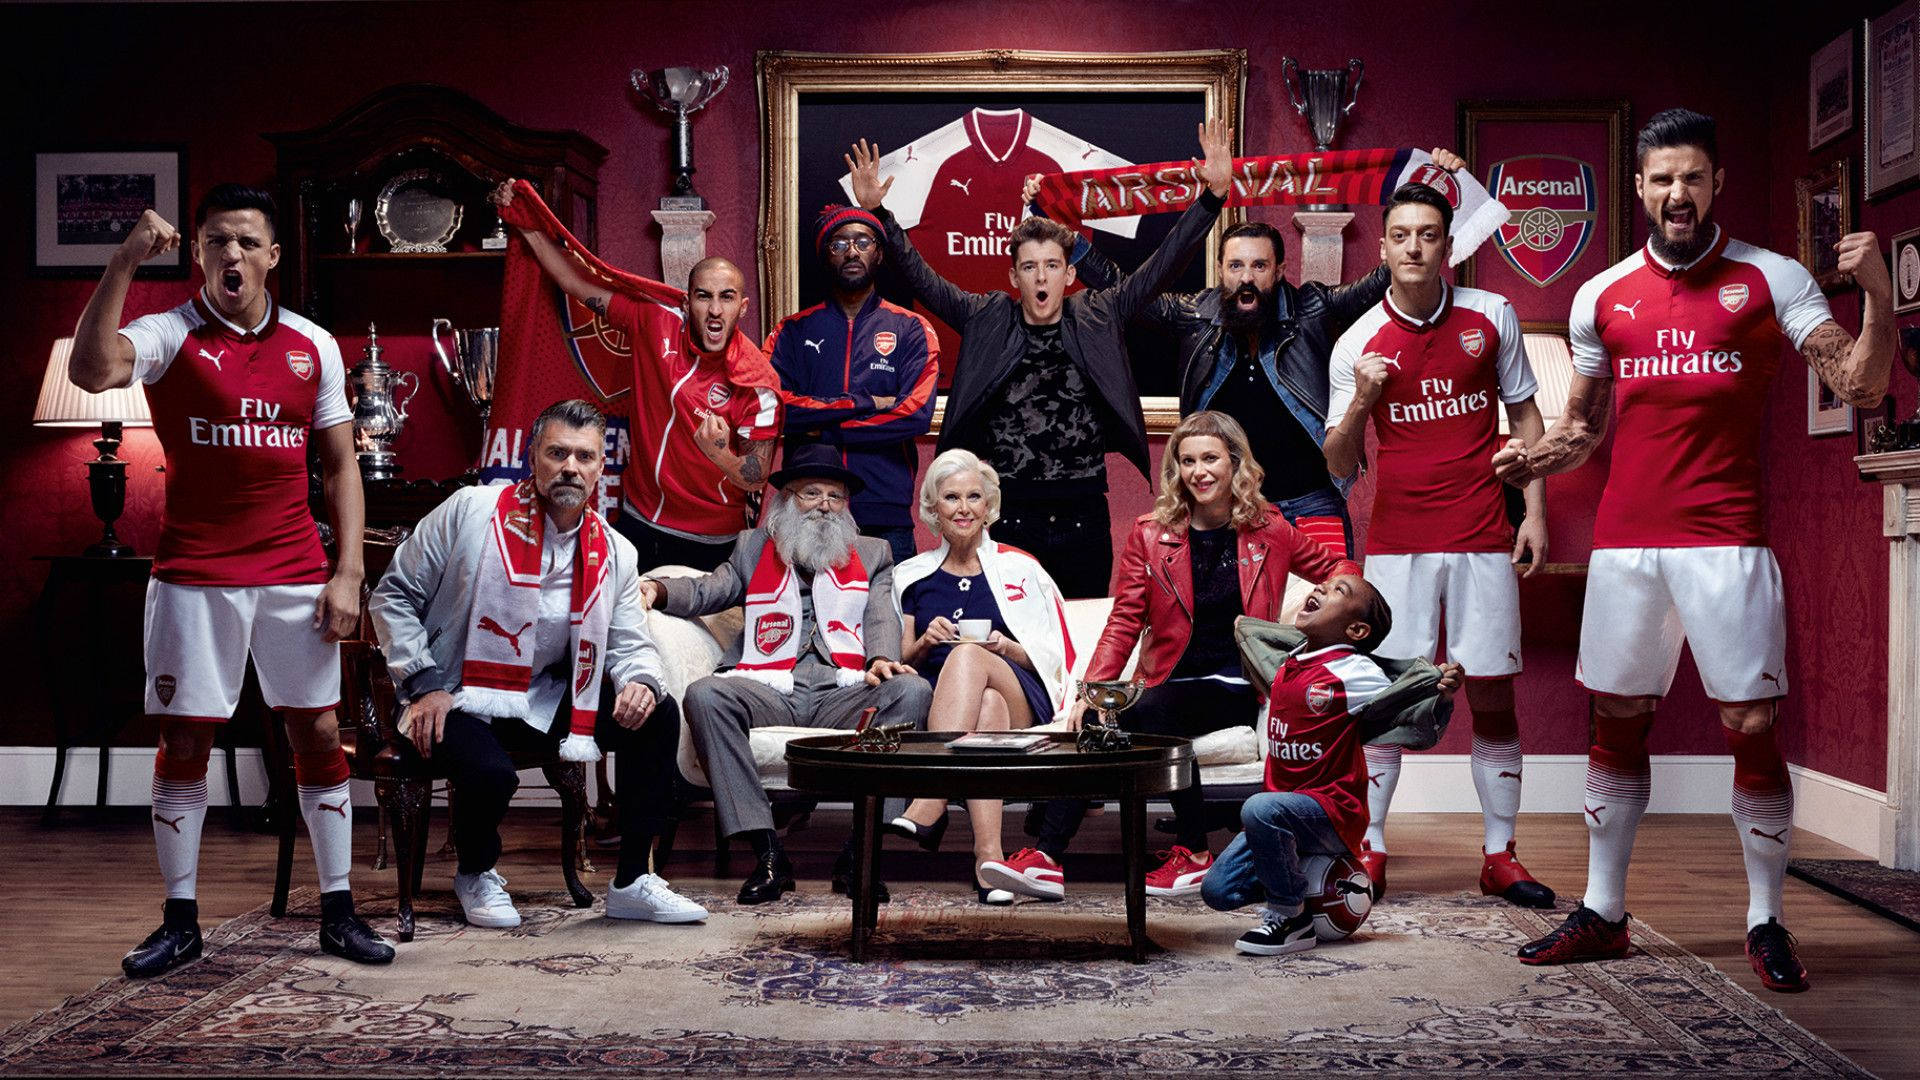 Arsenalfc Kampanjfoto. Wallpaper